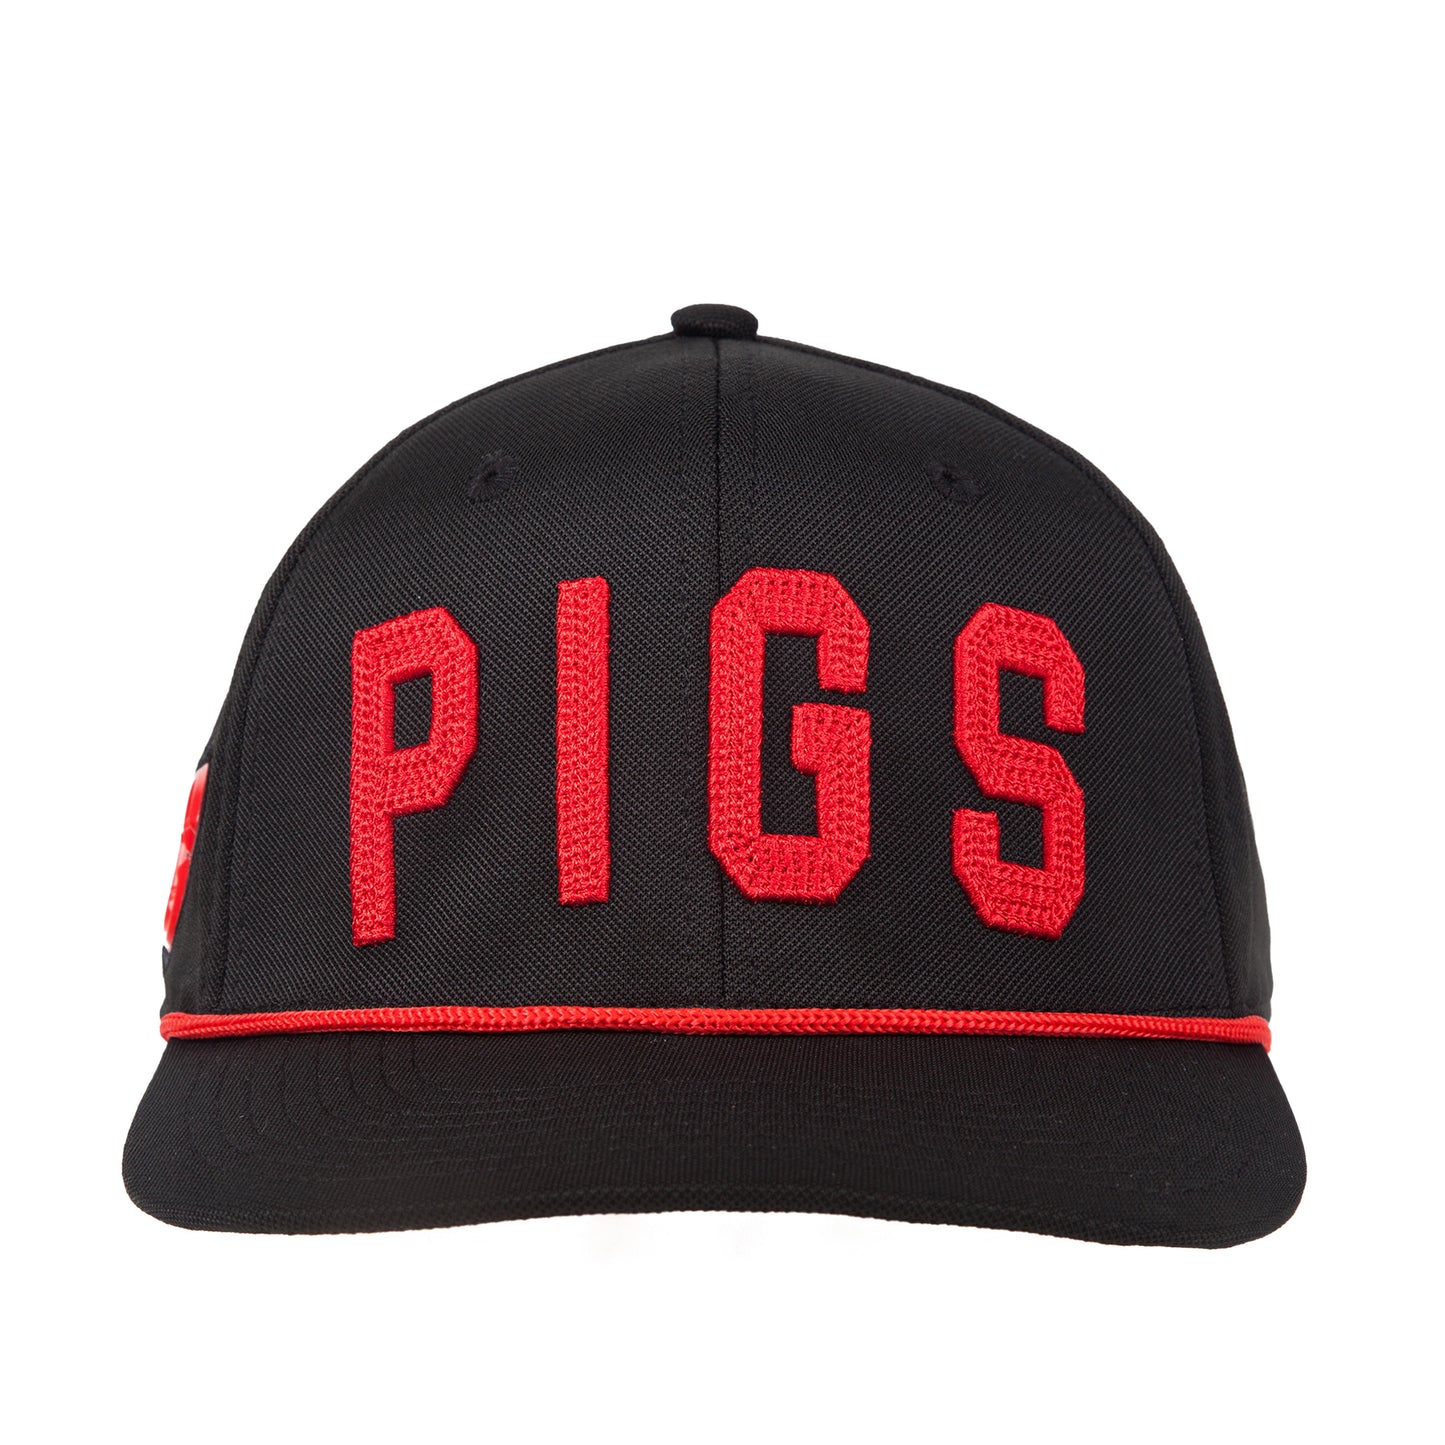 "OG" PIGS - Black - Snapback - Flat Bill